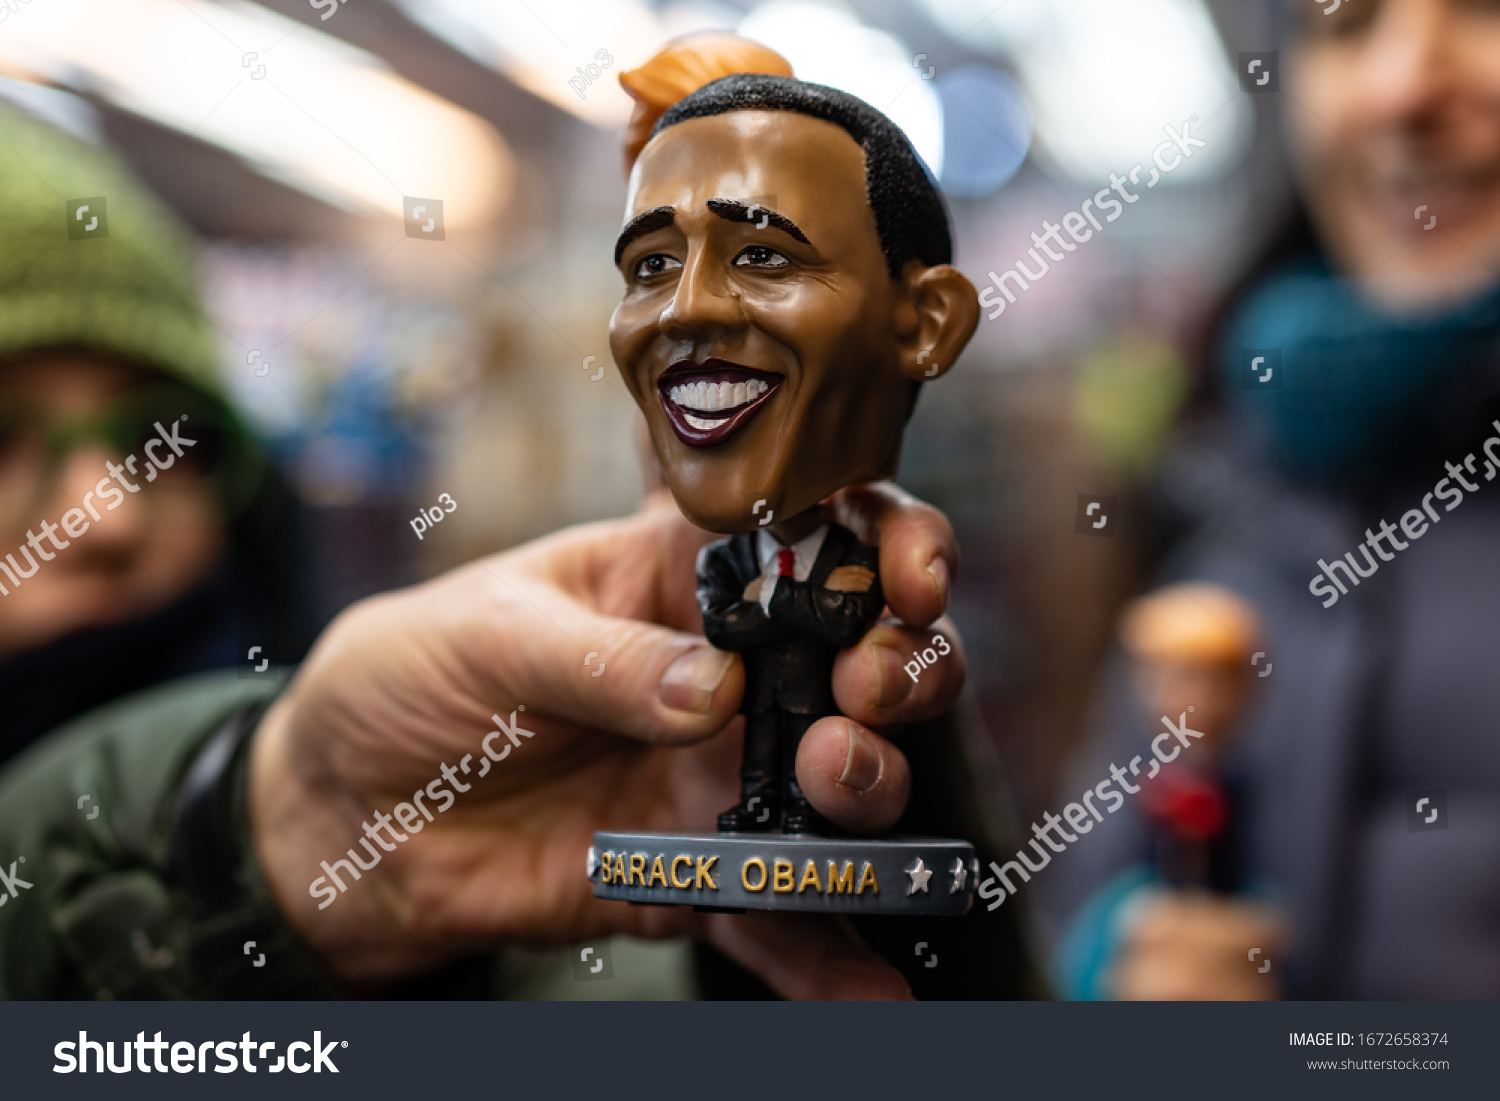 obama-cartoon-images-stock-photos-vectors-shutterstock